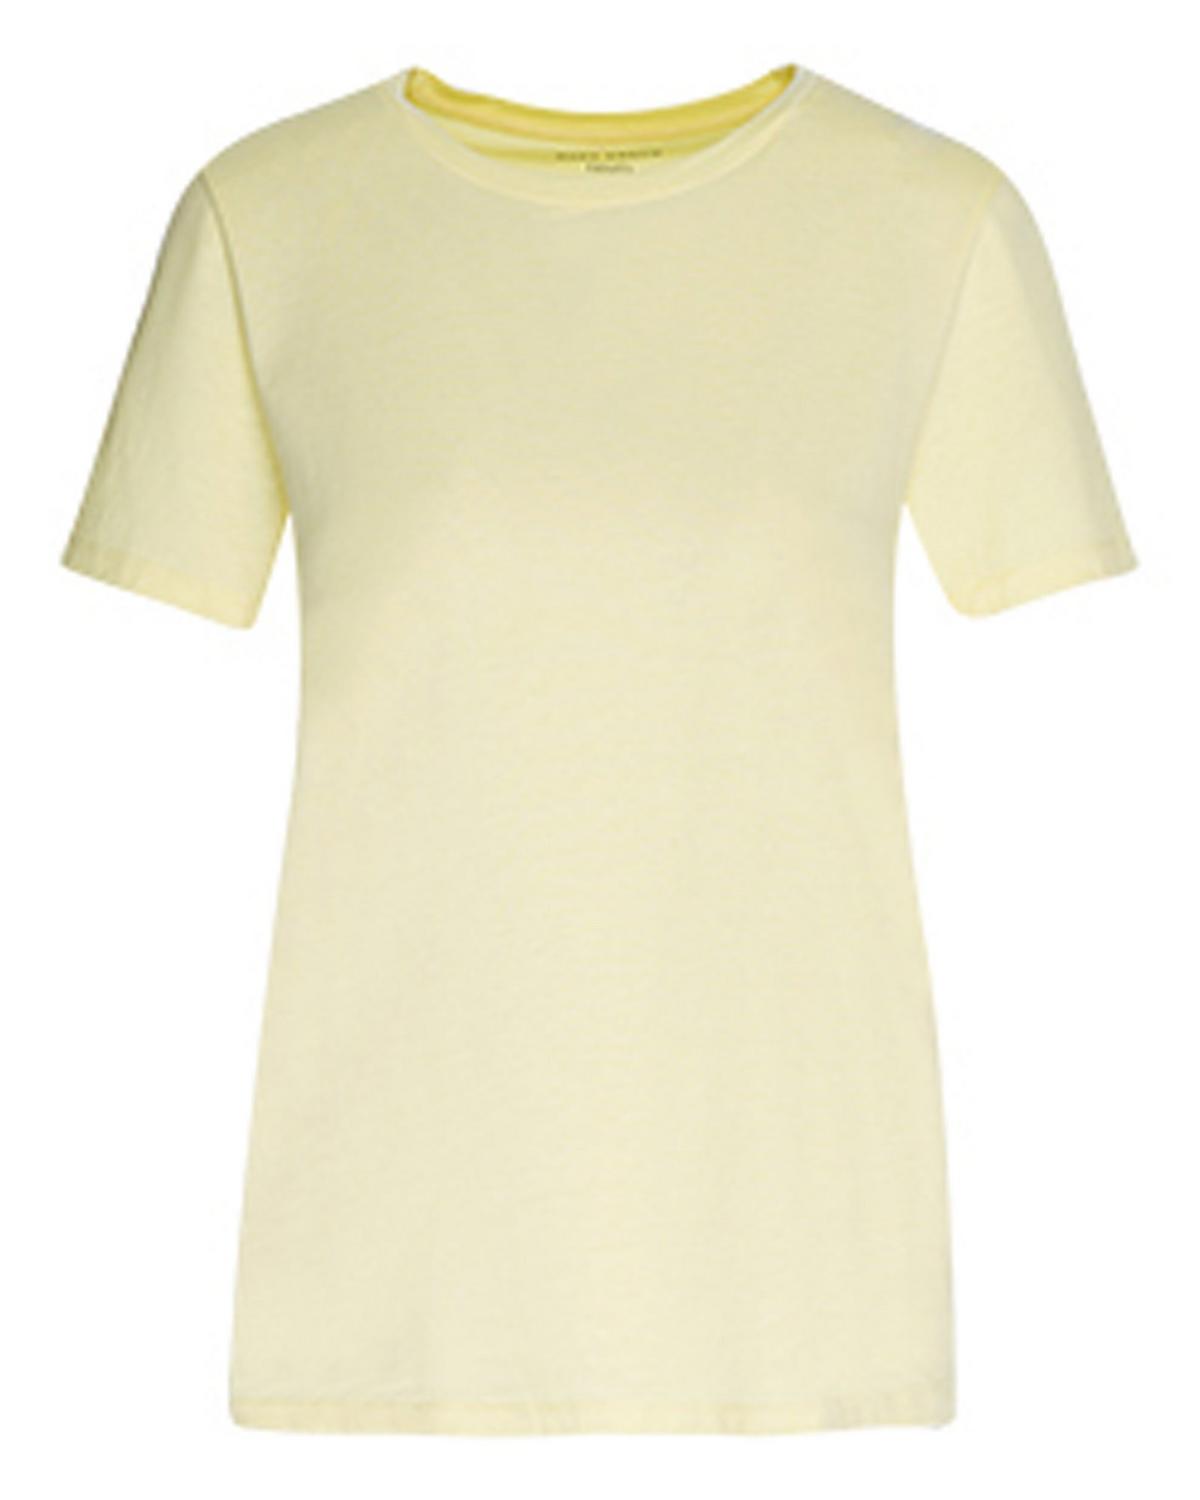 Rare Earth Women's Almond T-Shirt -  lemon